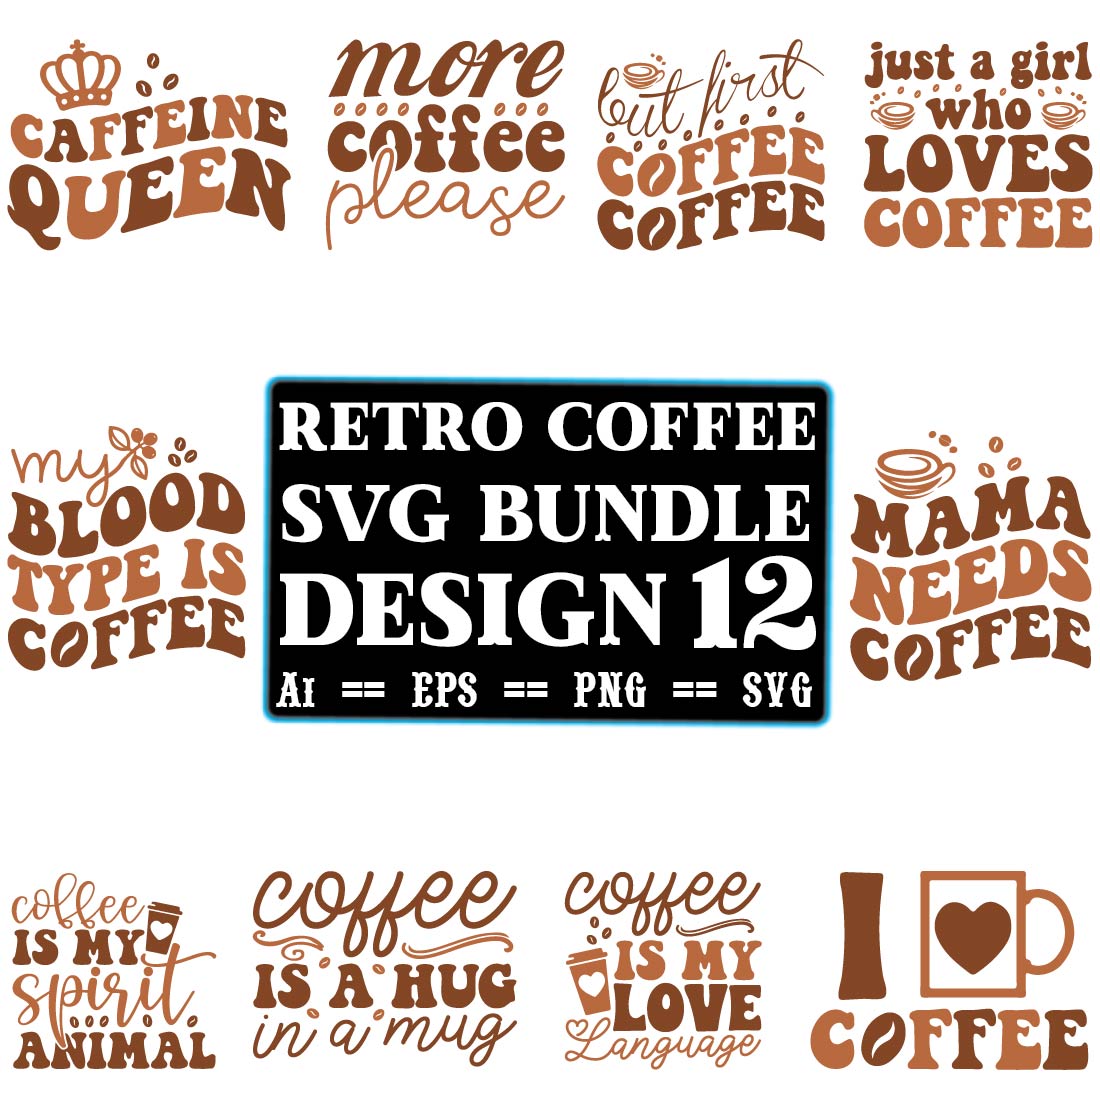 Retro Coffee SVG Bundle cover image.